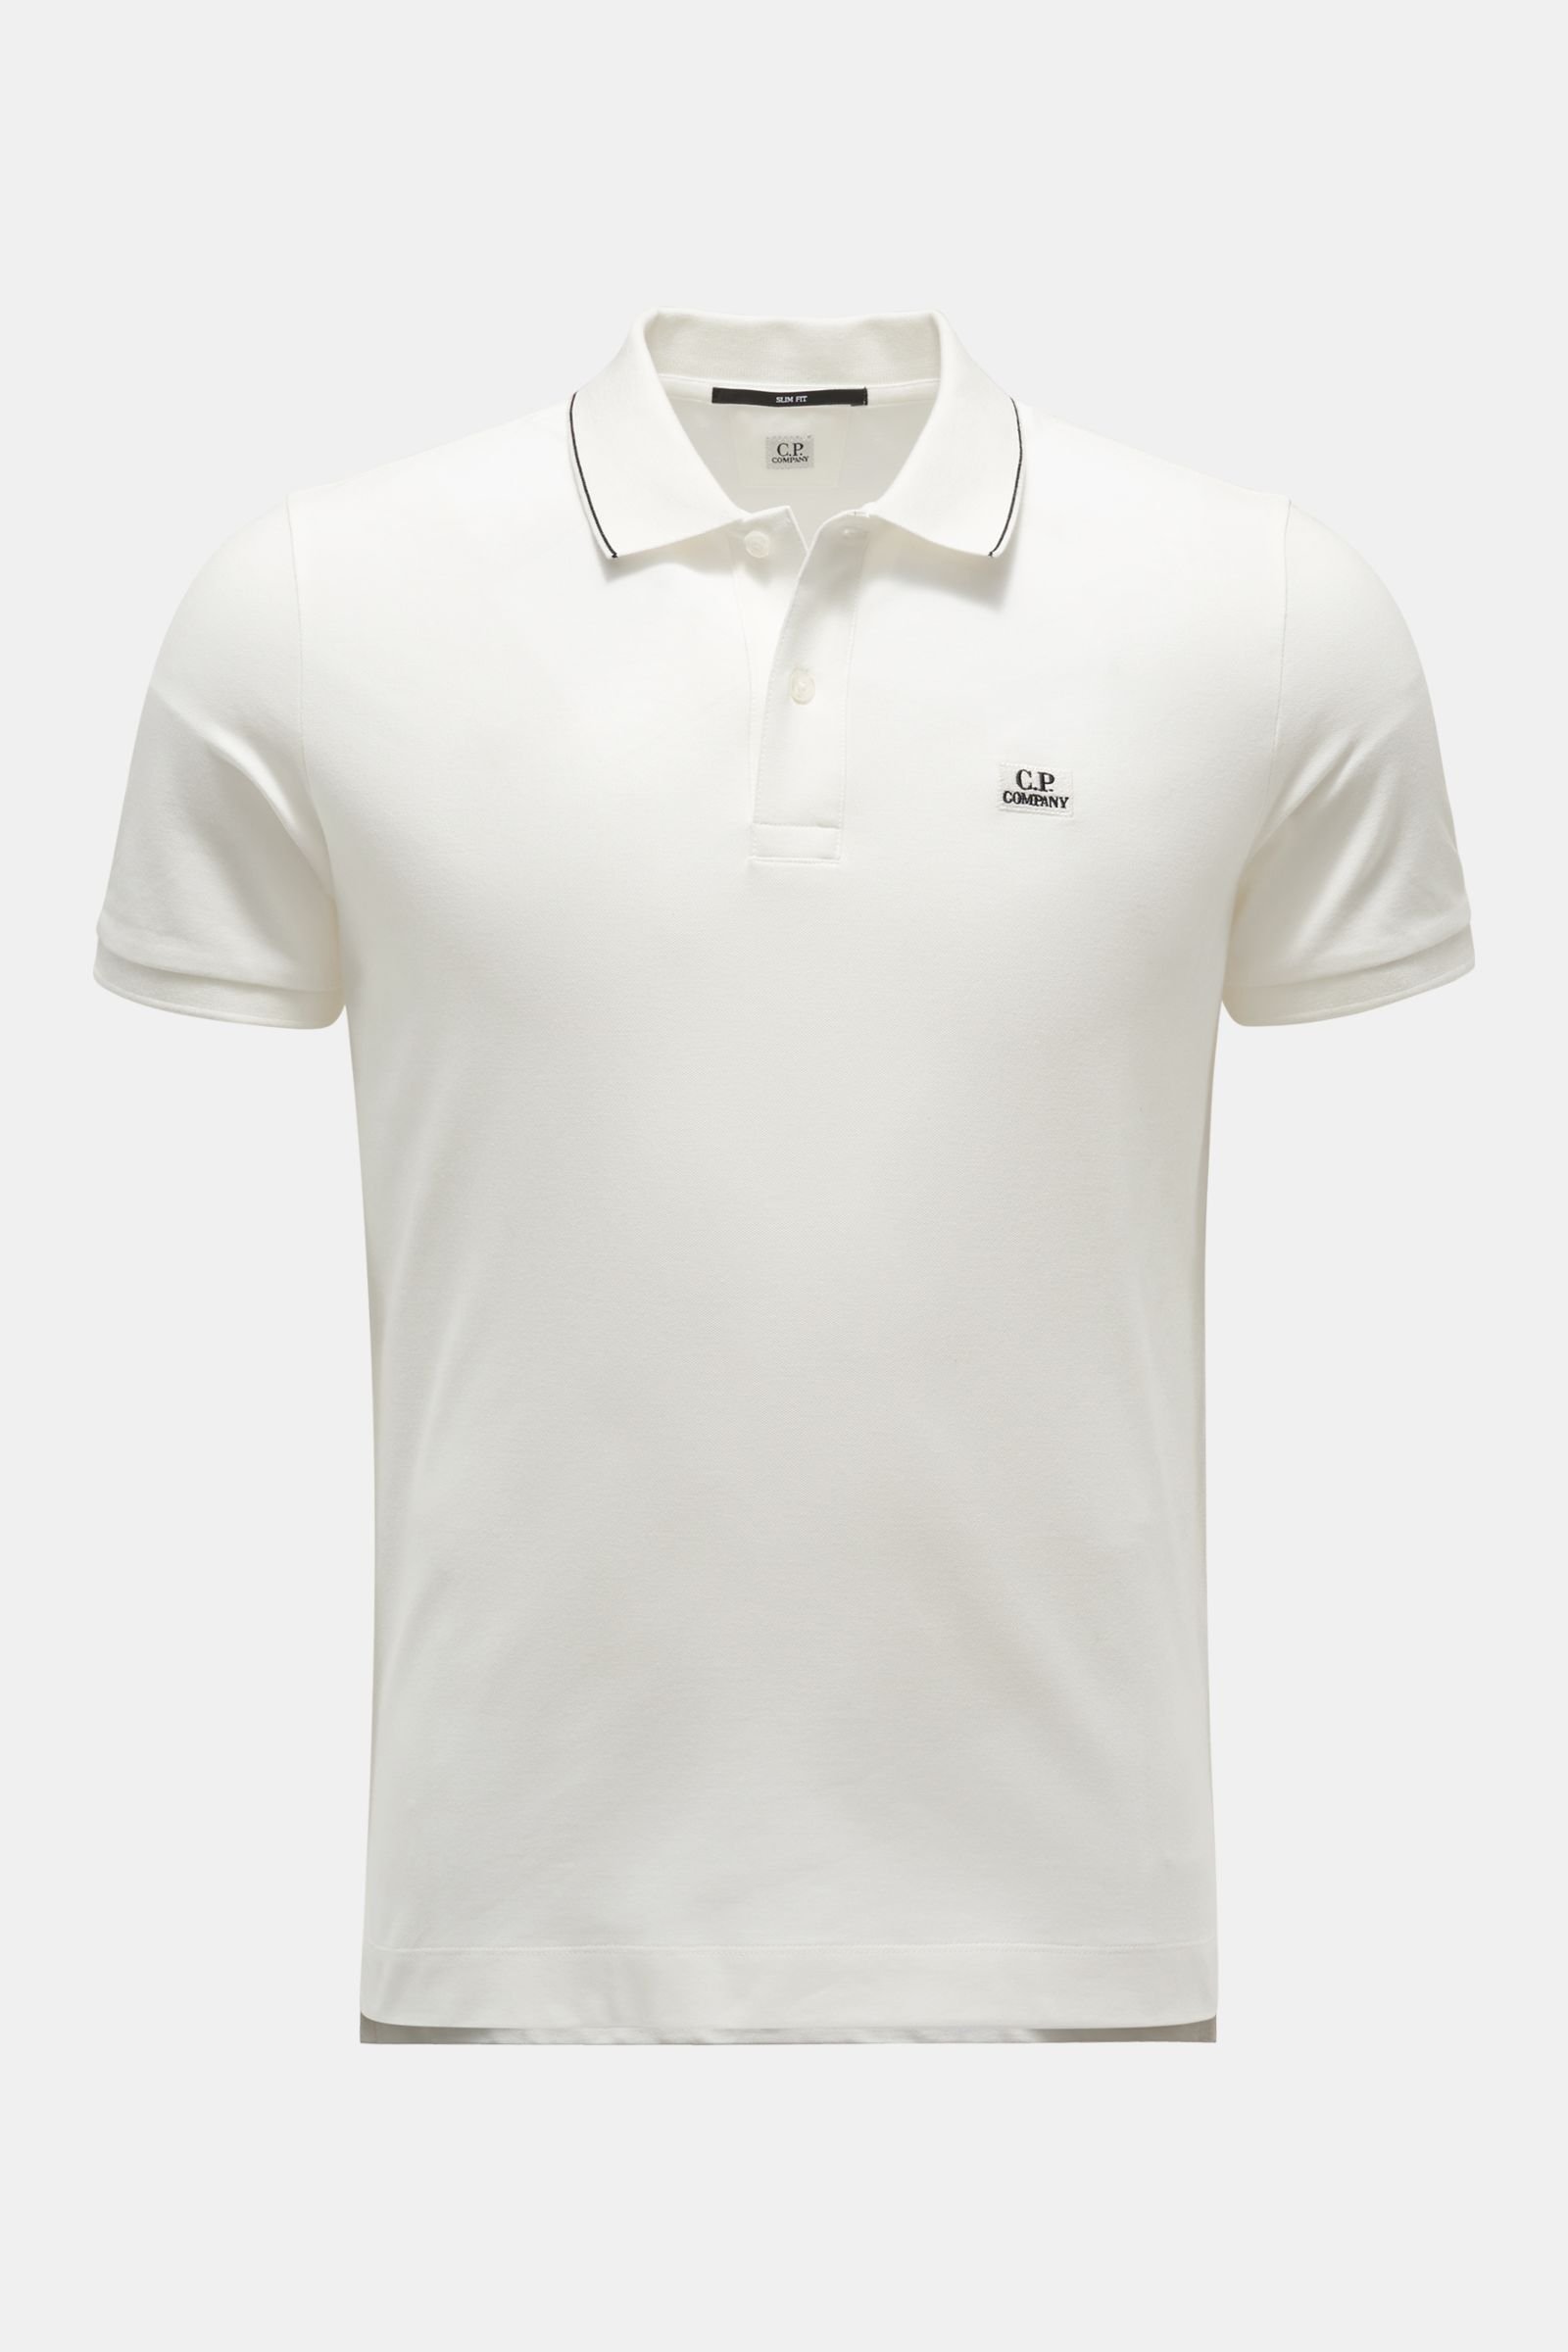 C.P. COMPANY polo shirt white | BRAUN Hamburg